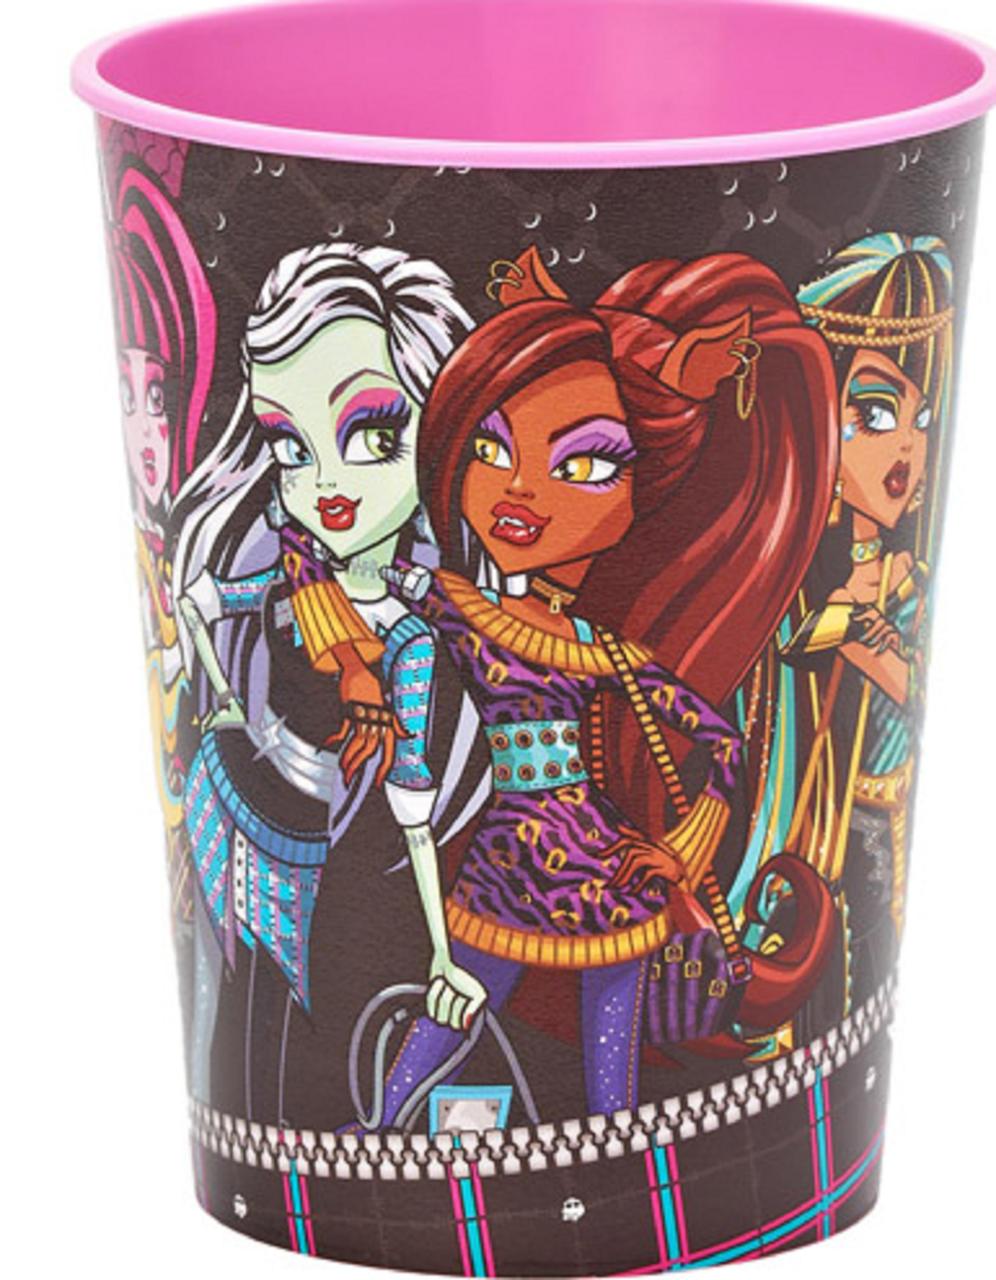 Monster High Pink Plastic 16 oz Reusable Keepsake Souvenir Favor Cup (1 Cup) - image 1 of 2